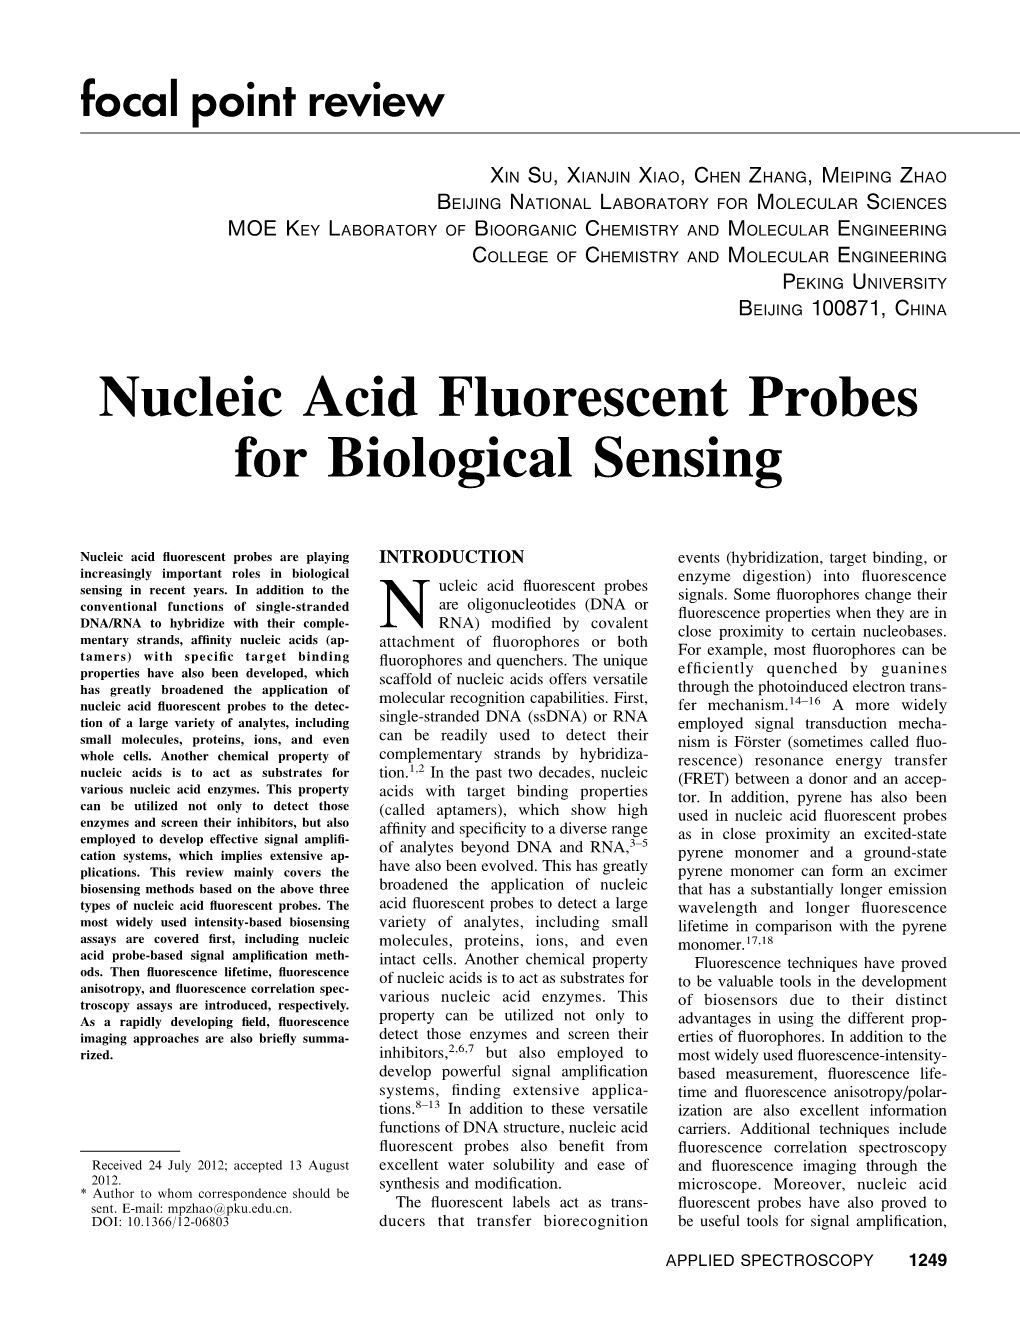 Nucleic Acid Fluorescent Probes for Biological Sensing